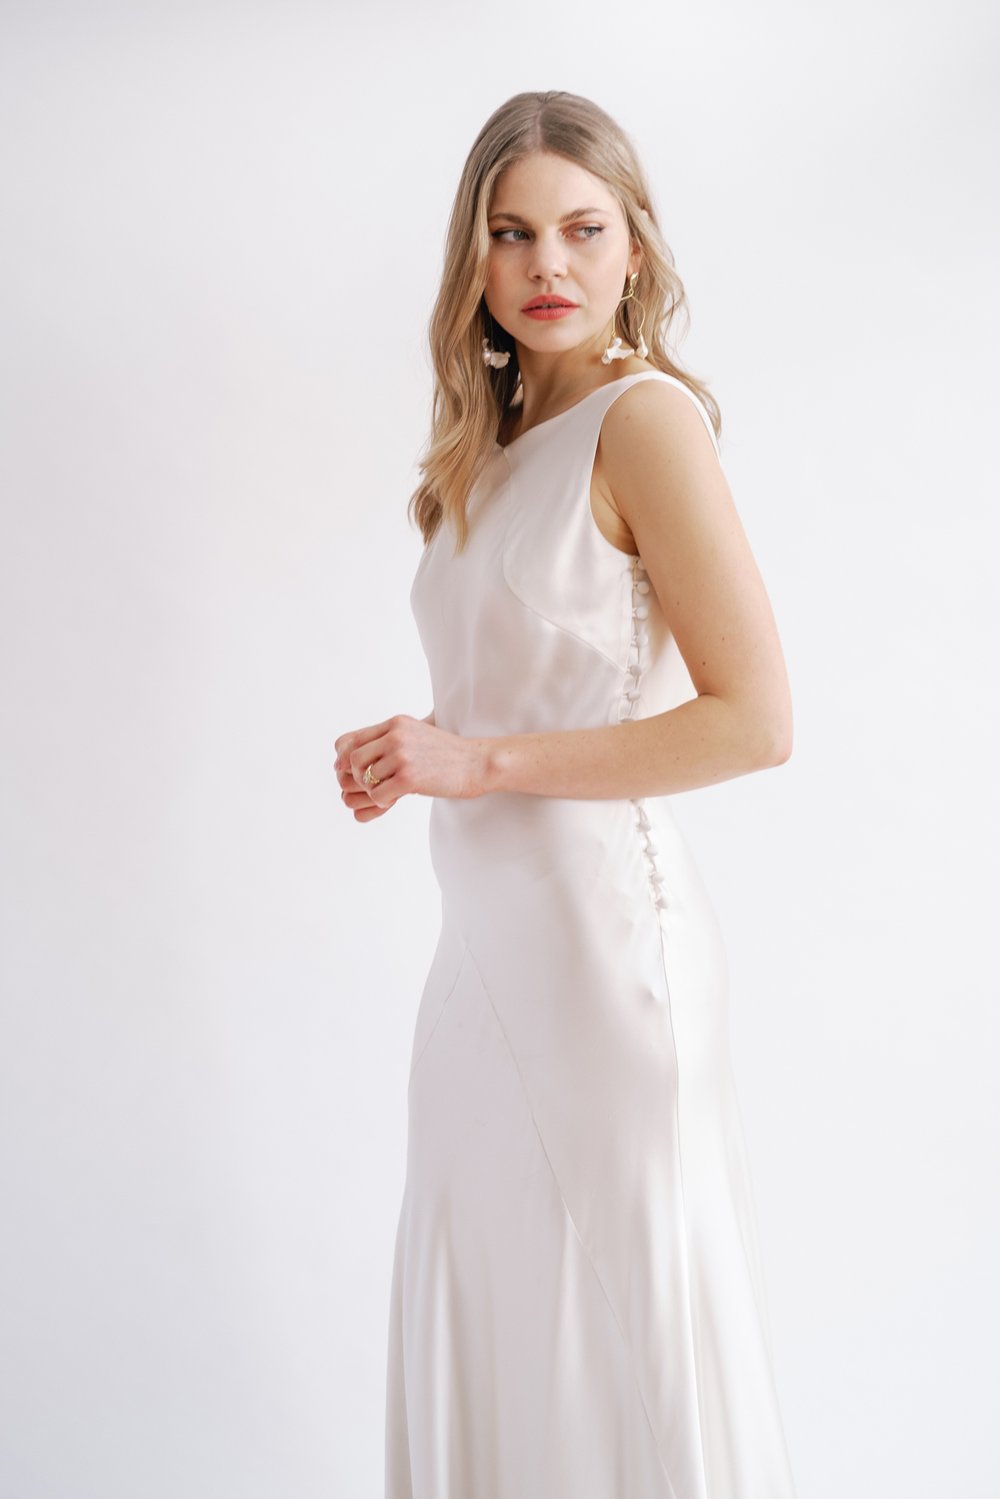 Gladioli silk wedding gown Kate Beaumont Sheffield 4.jpg